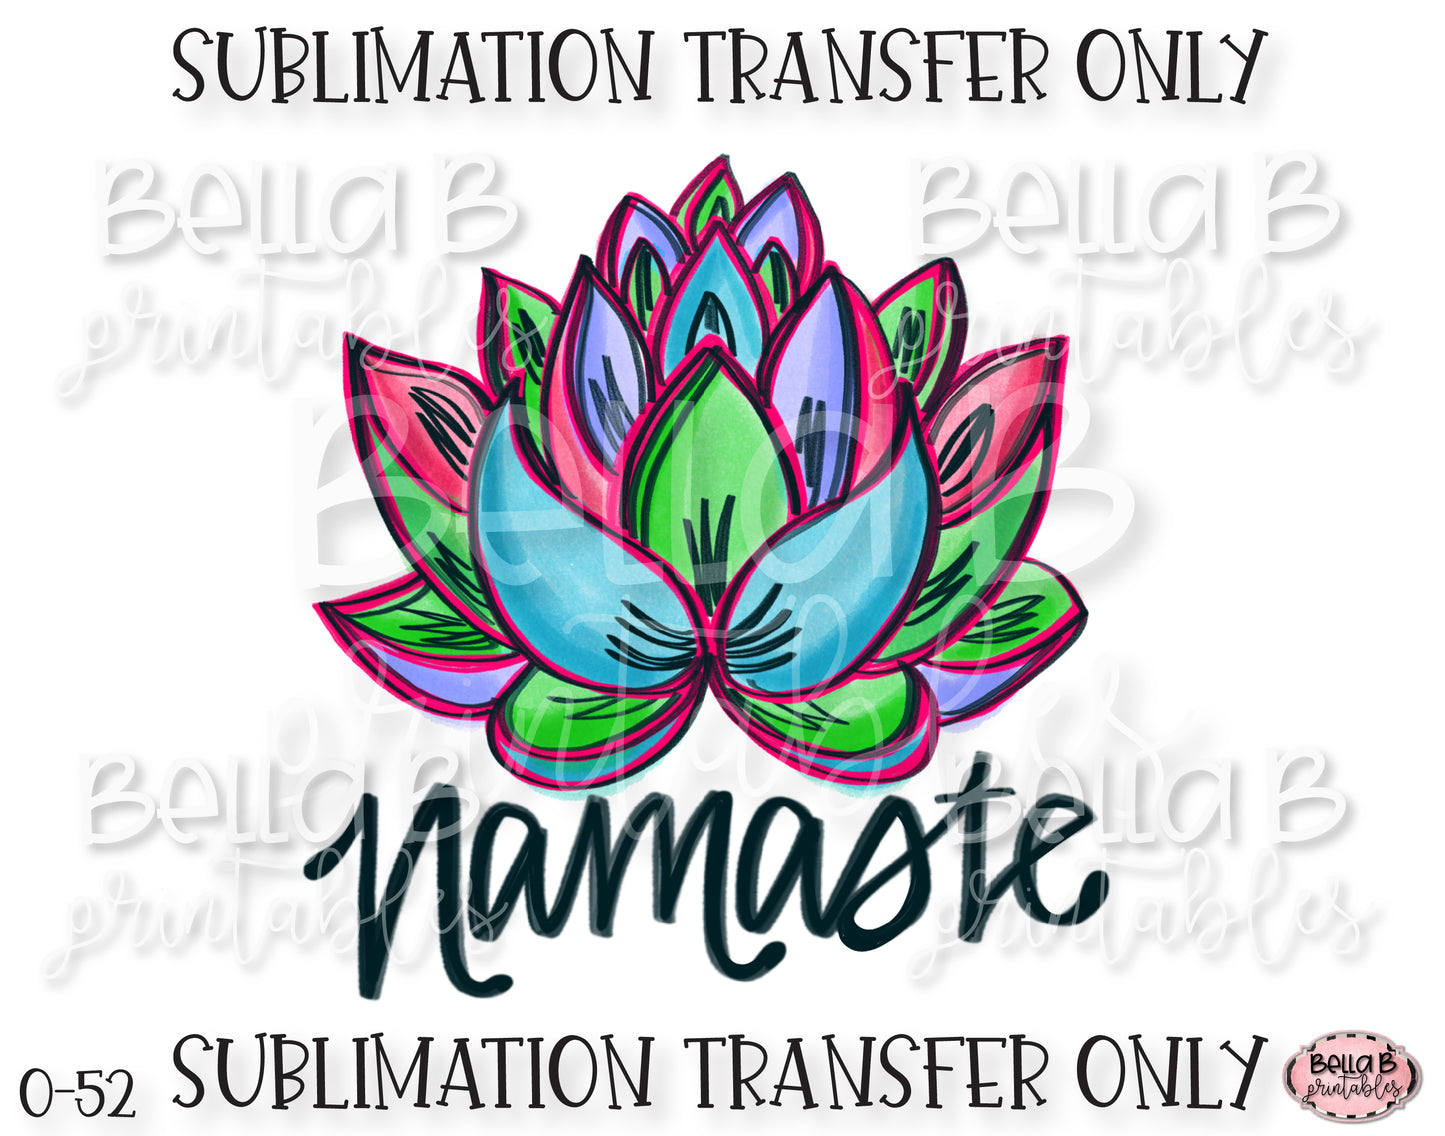 Namaste Lotus Sublimation Transfer, Ready To Press, Heat Press Transfer, Sublimation Print